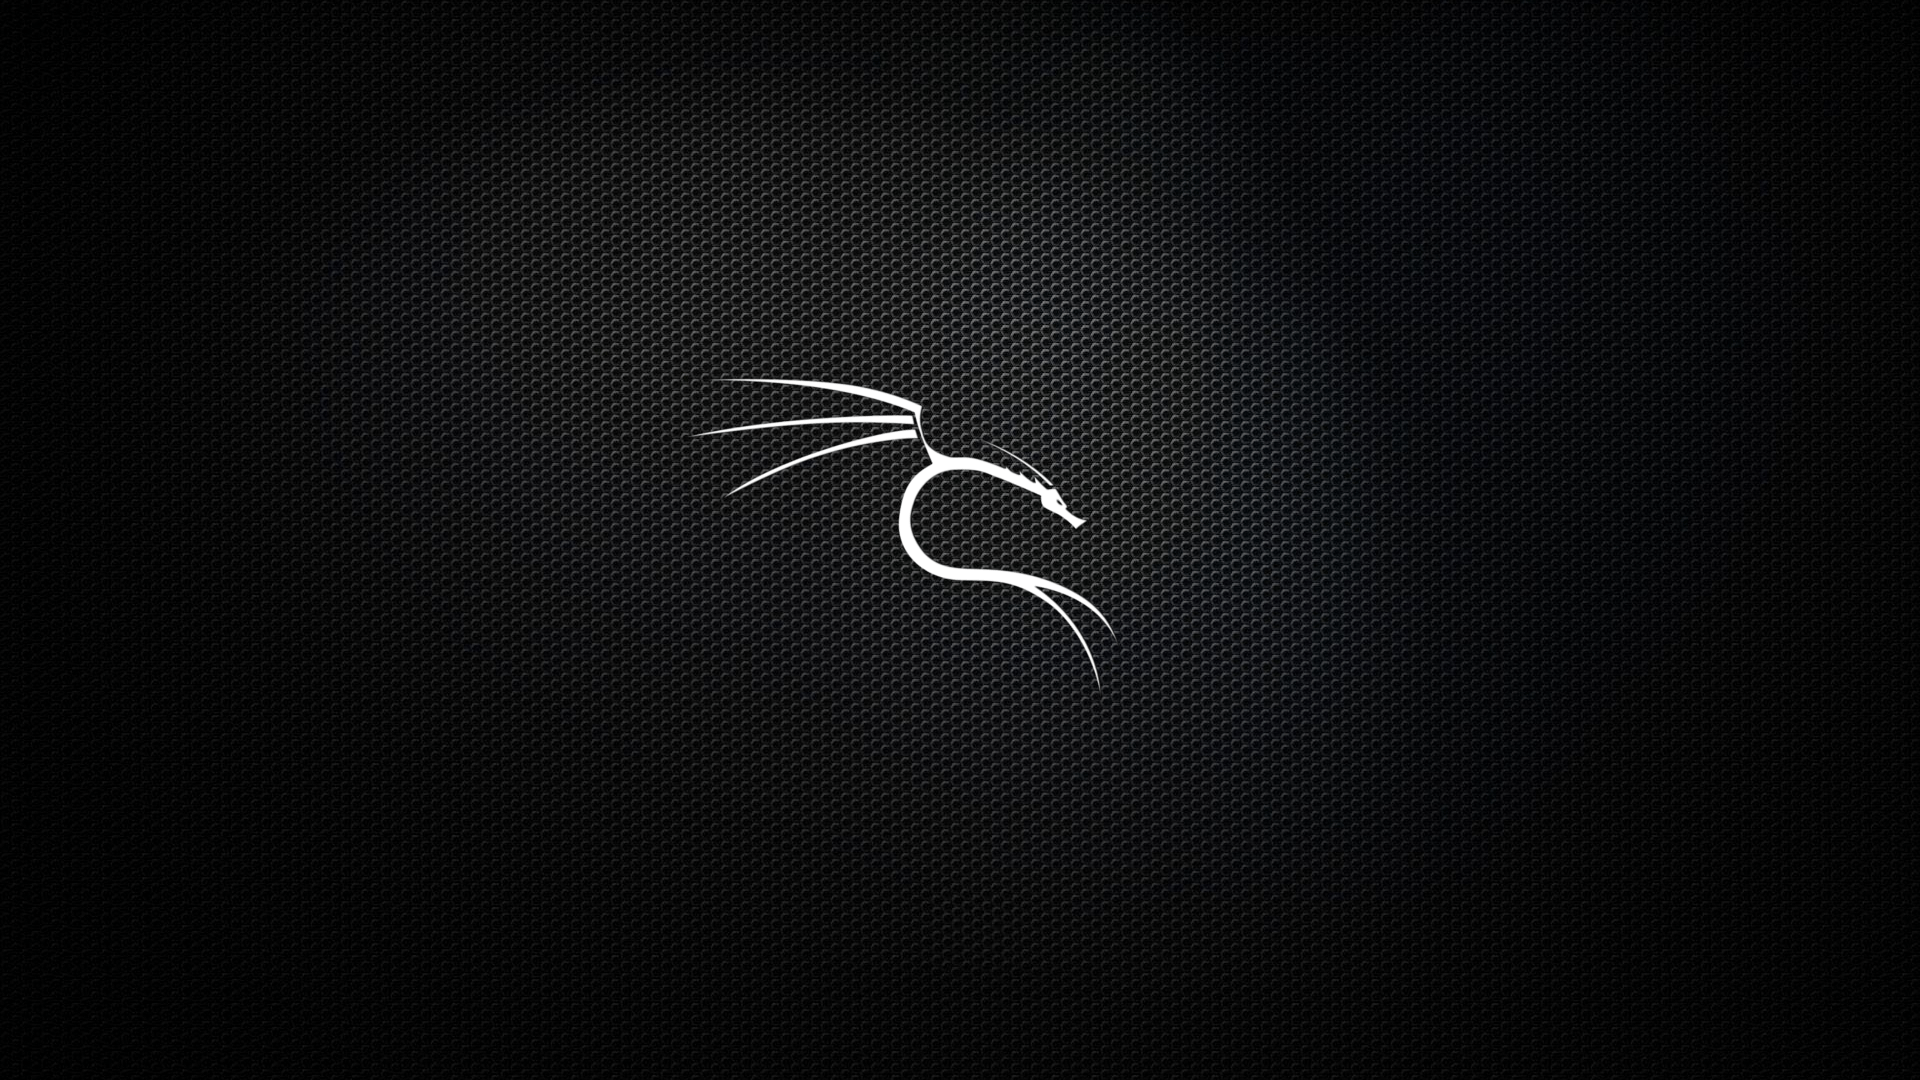 GitHub Kali Linux Wallpaper: A Set Of Dedicated Kali